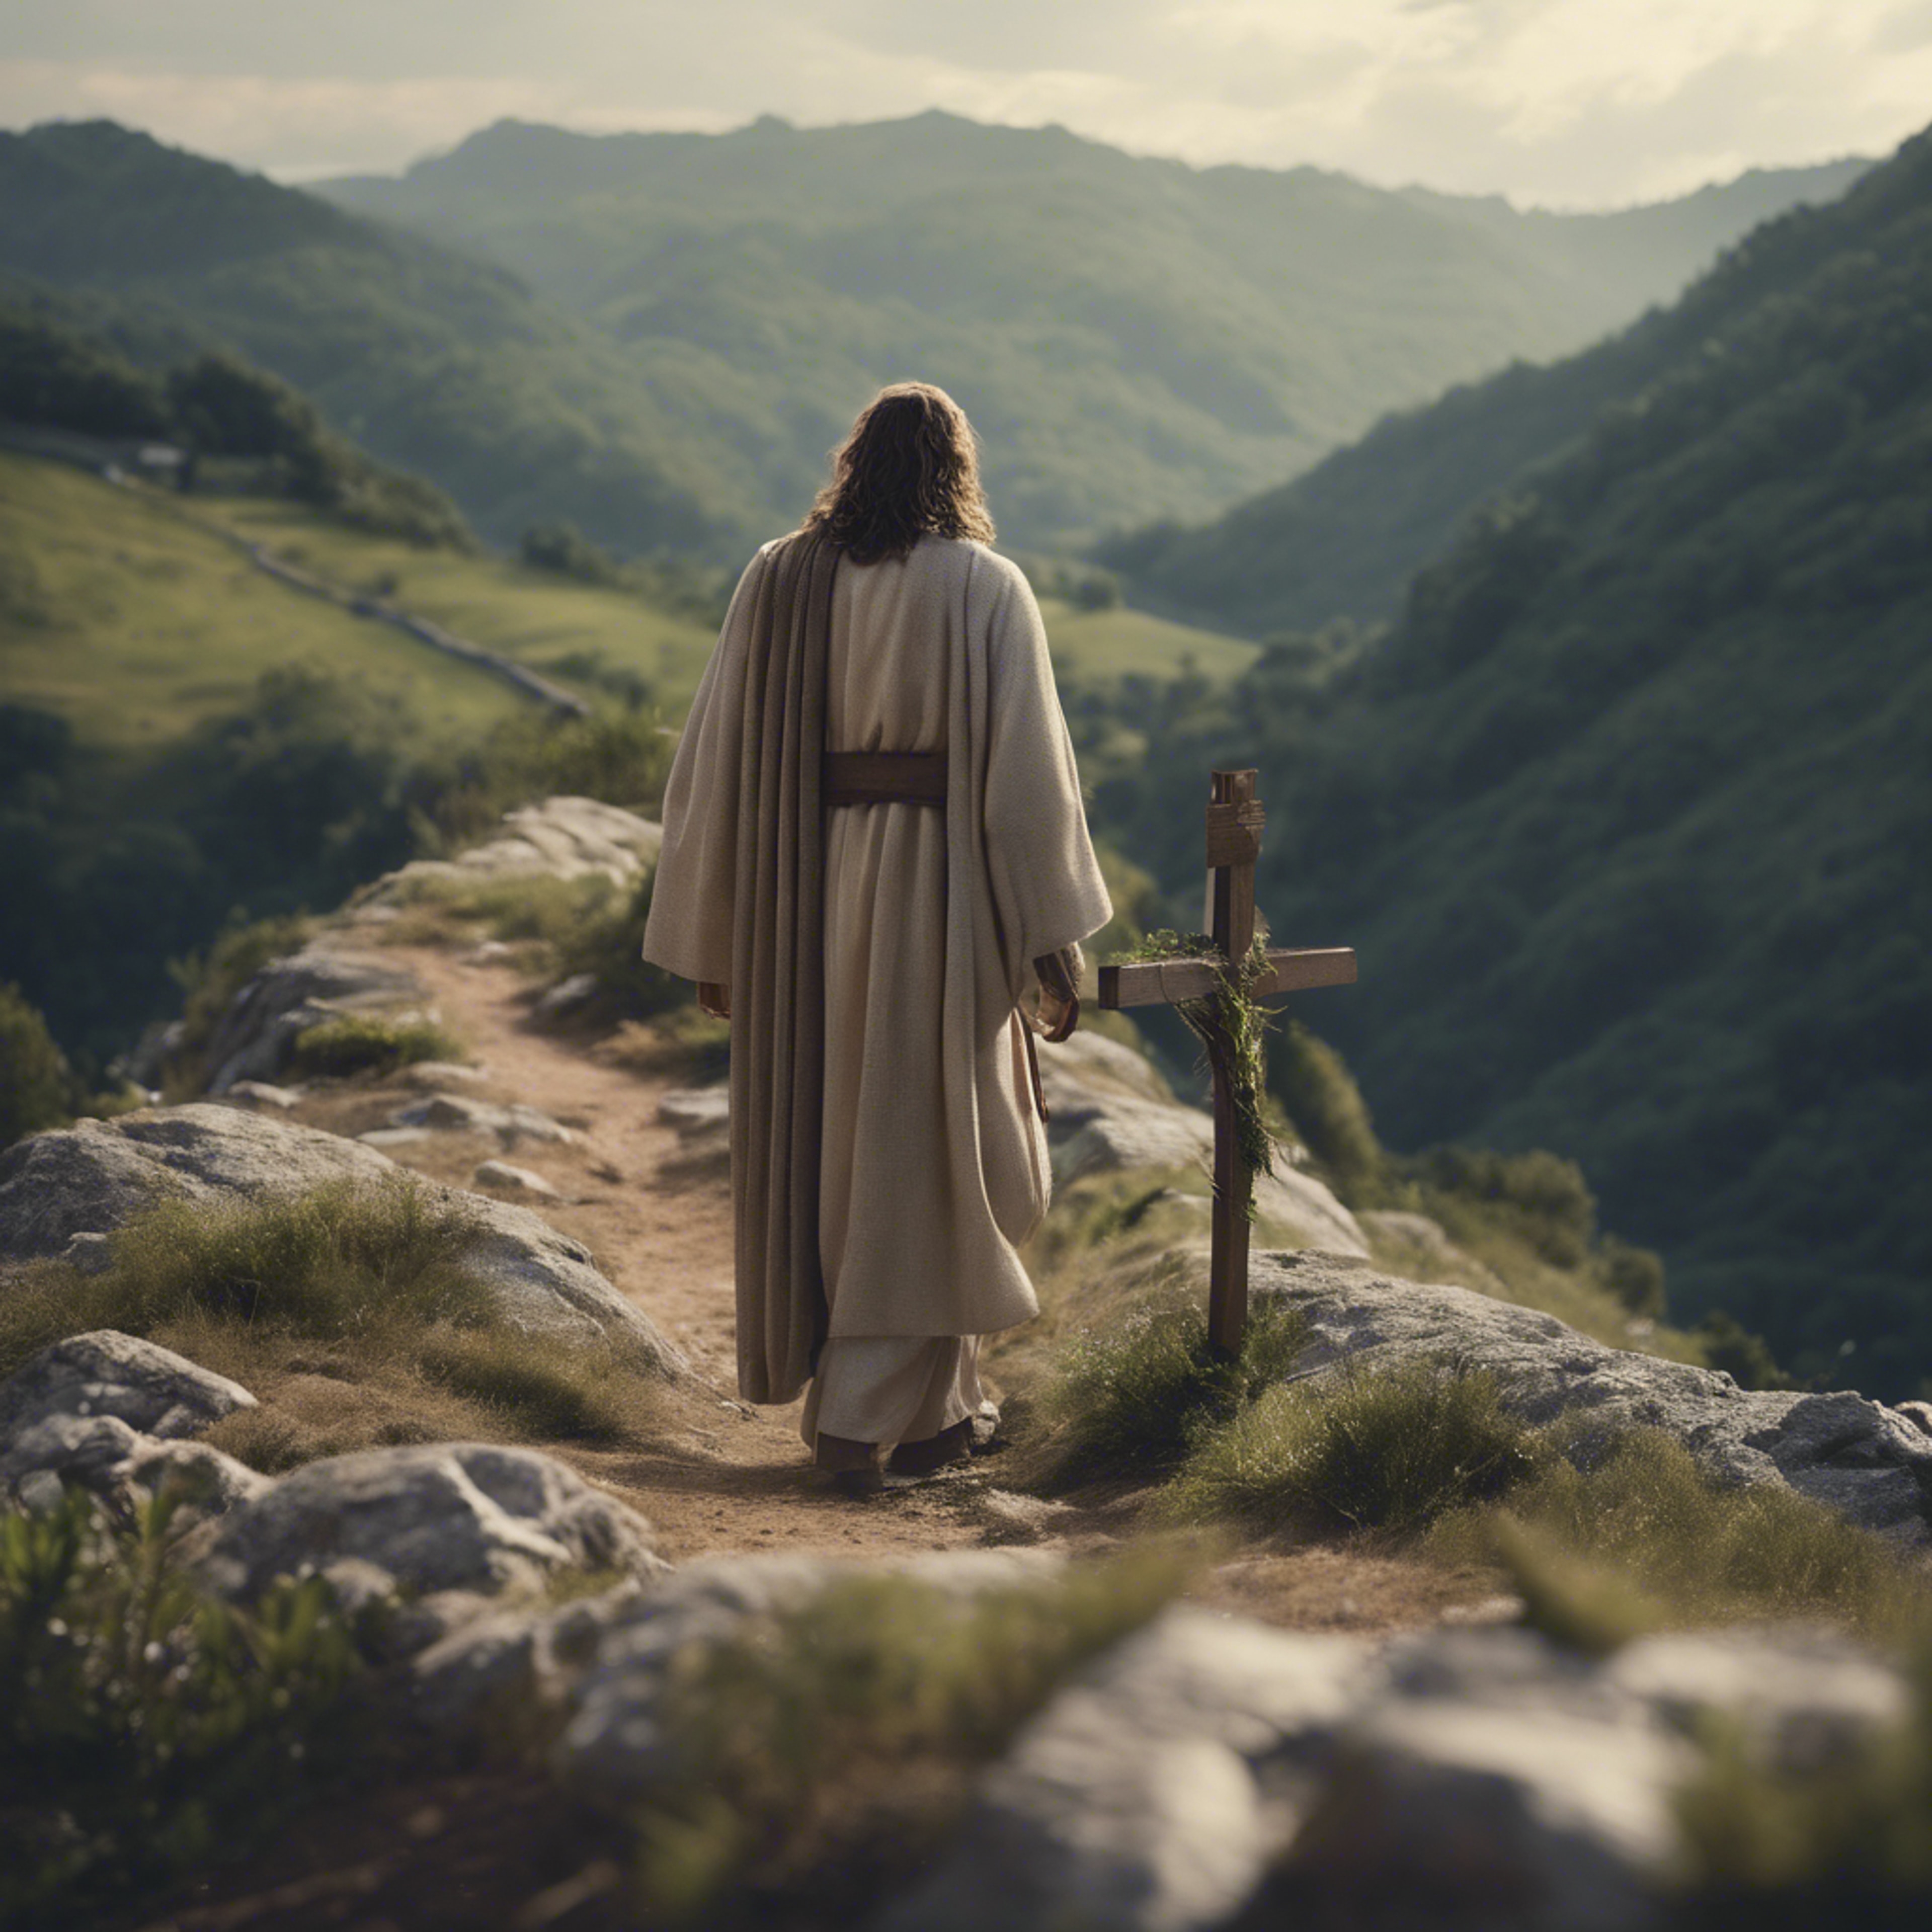 A somber yet inspiring scene of Jesus carrying the cross along a winding mountain path. ورق الجدران[cec6dd957e1b48d0bb97]